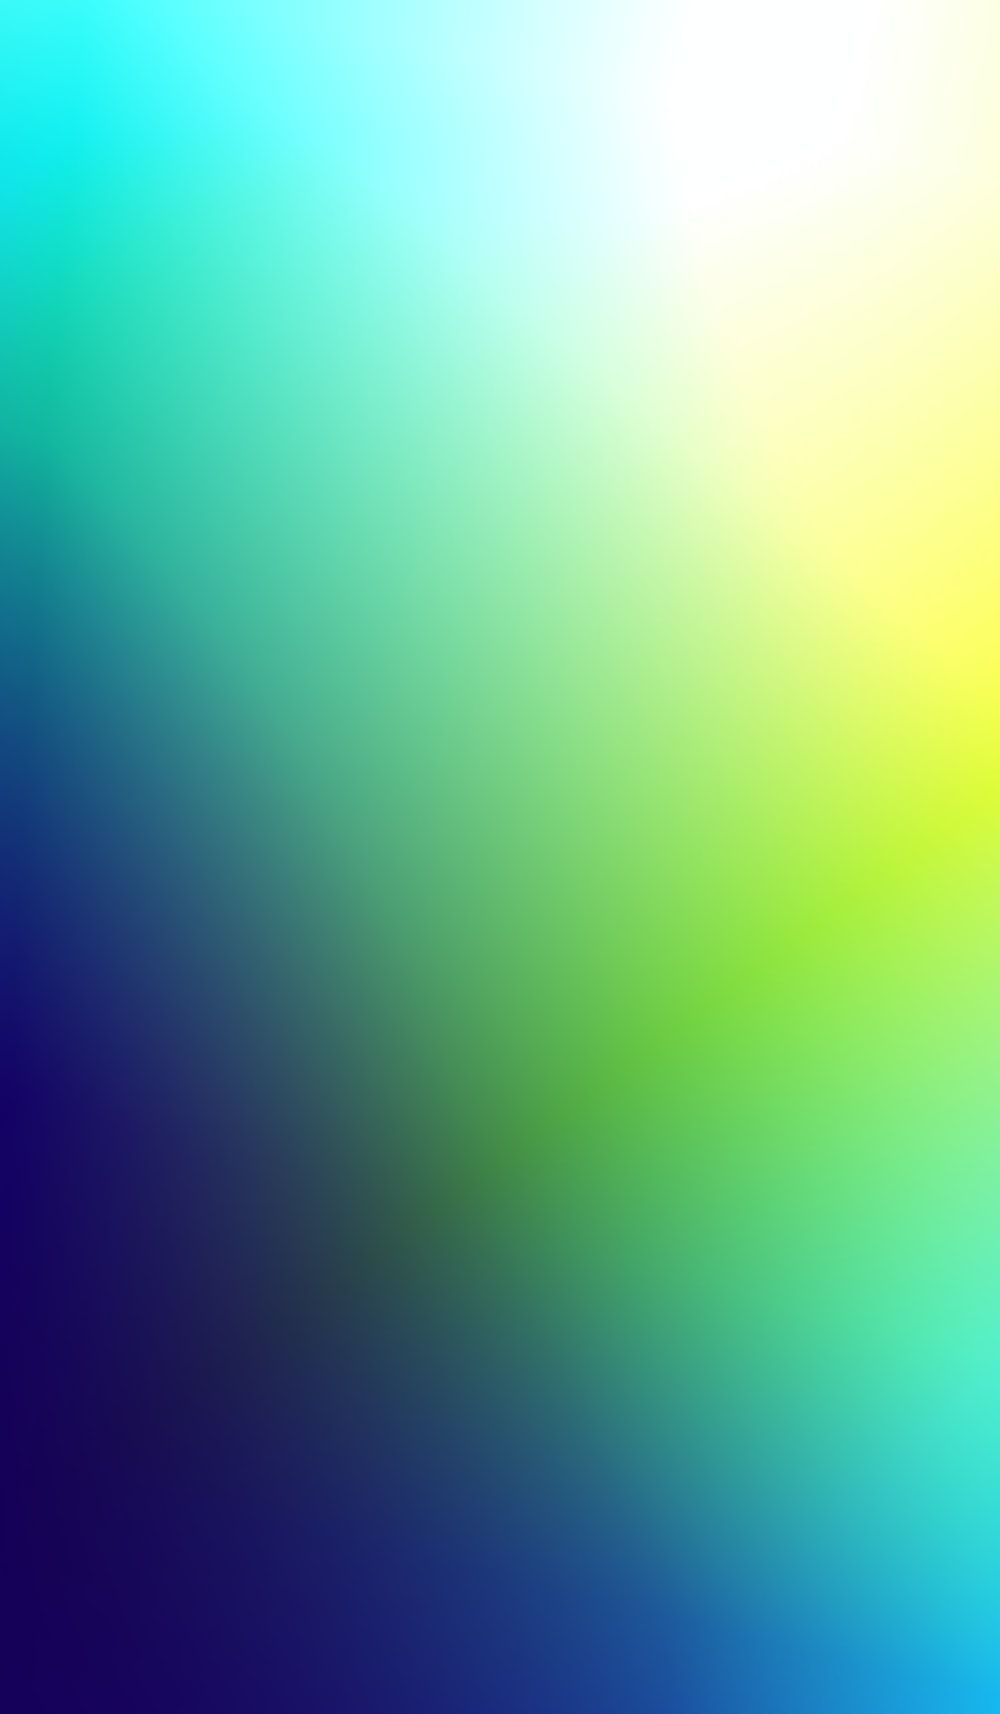 Solid Color Background Image: Download HD Background